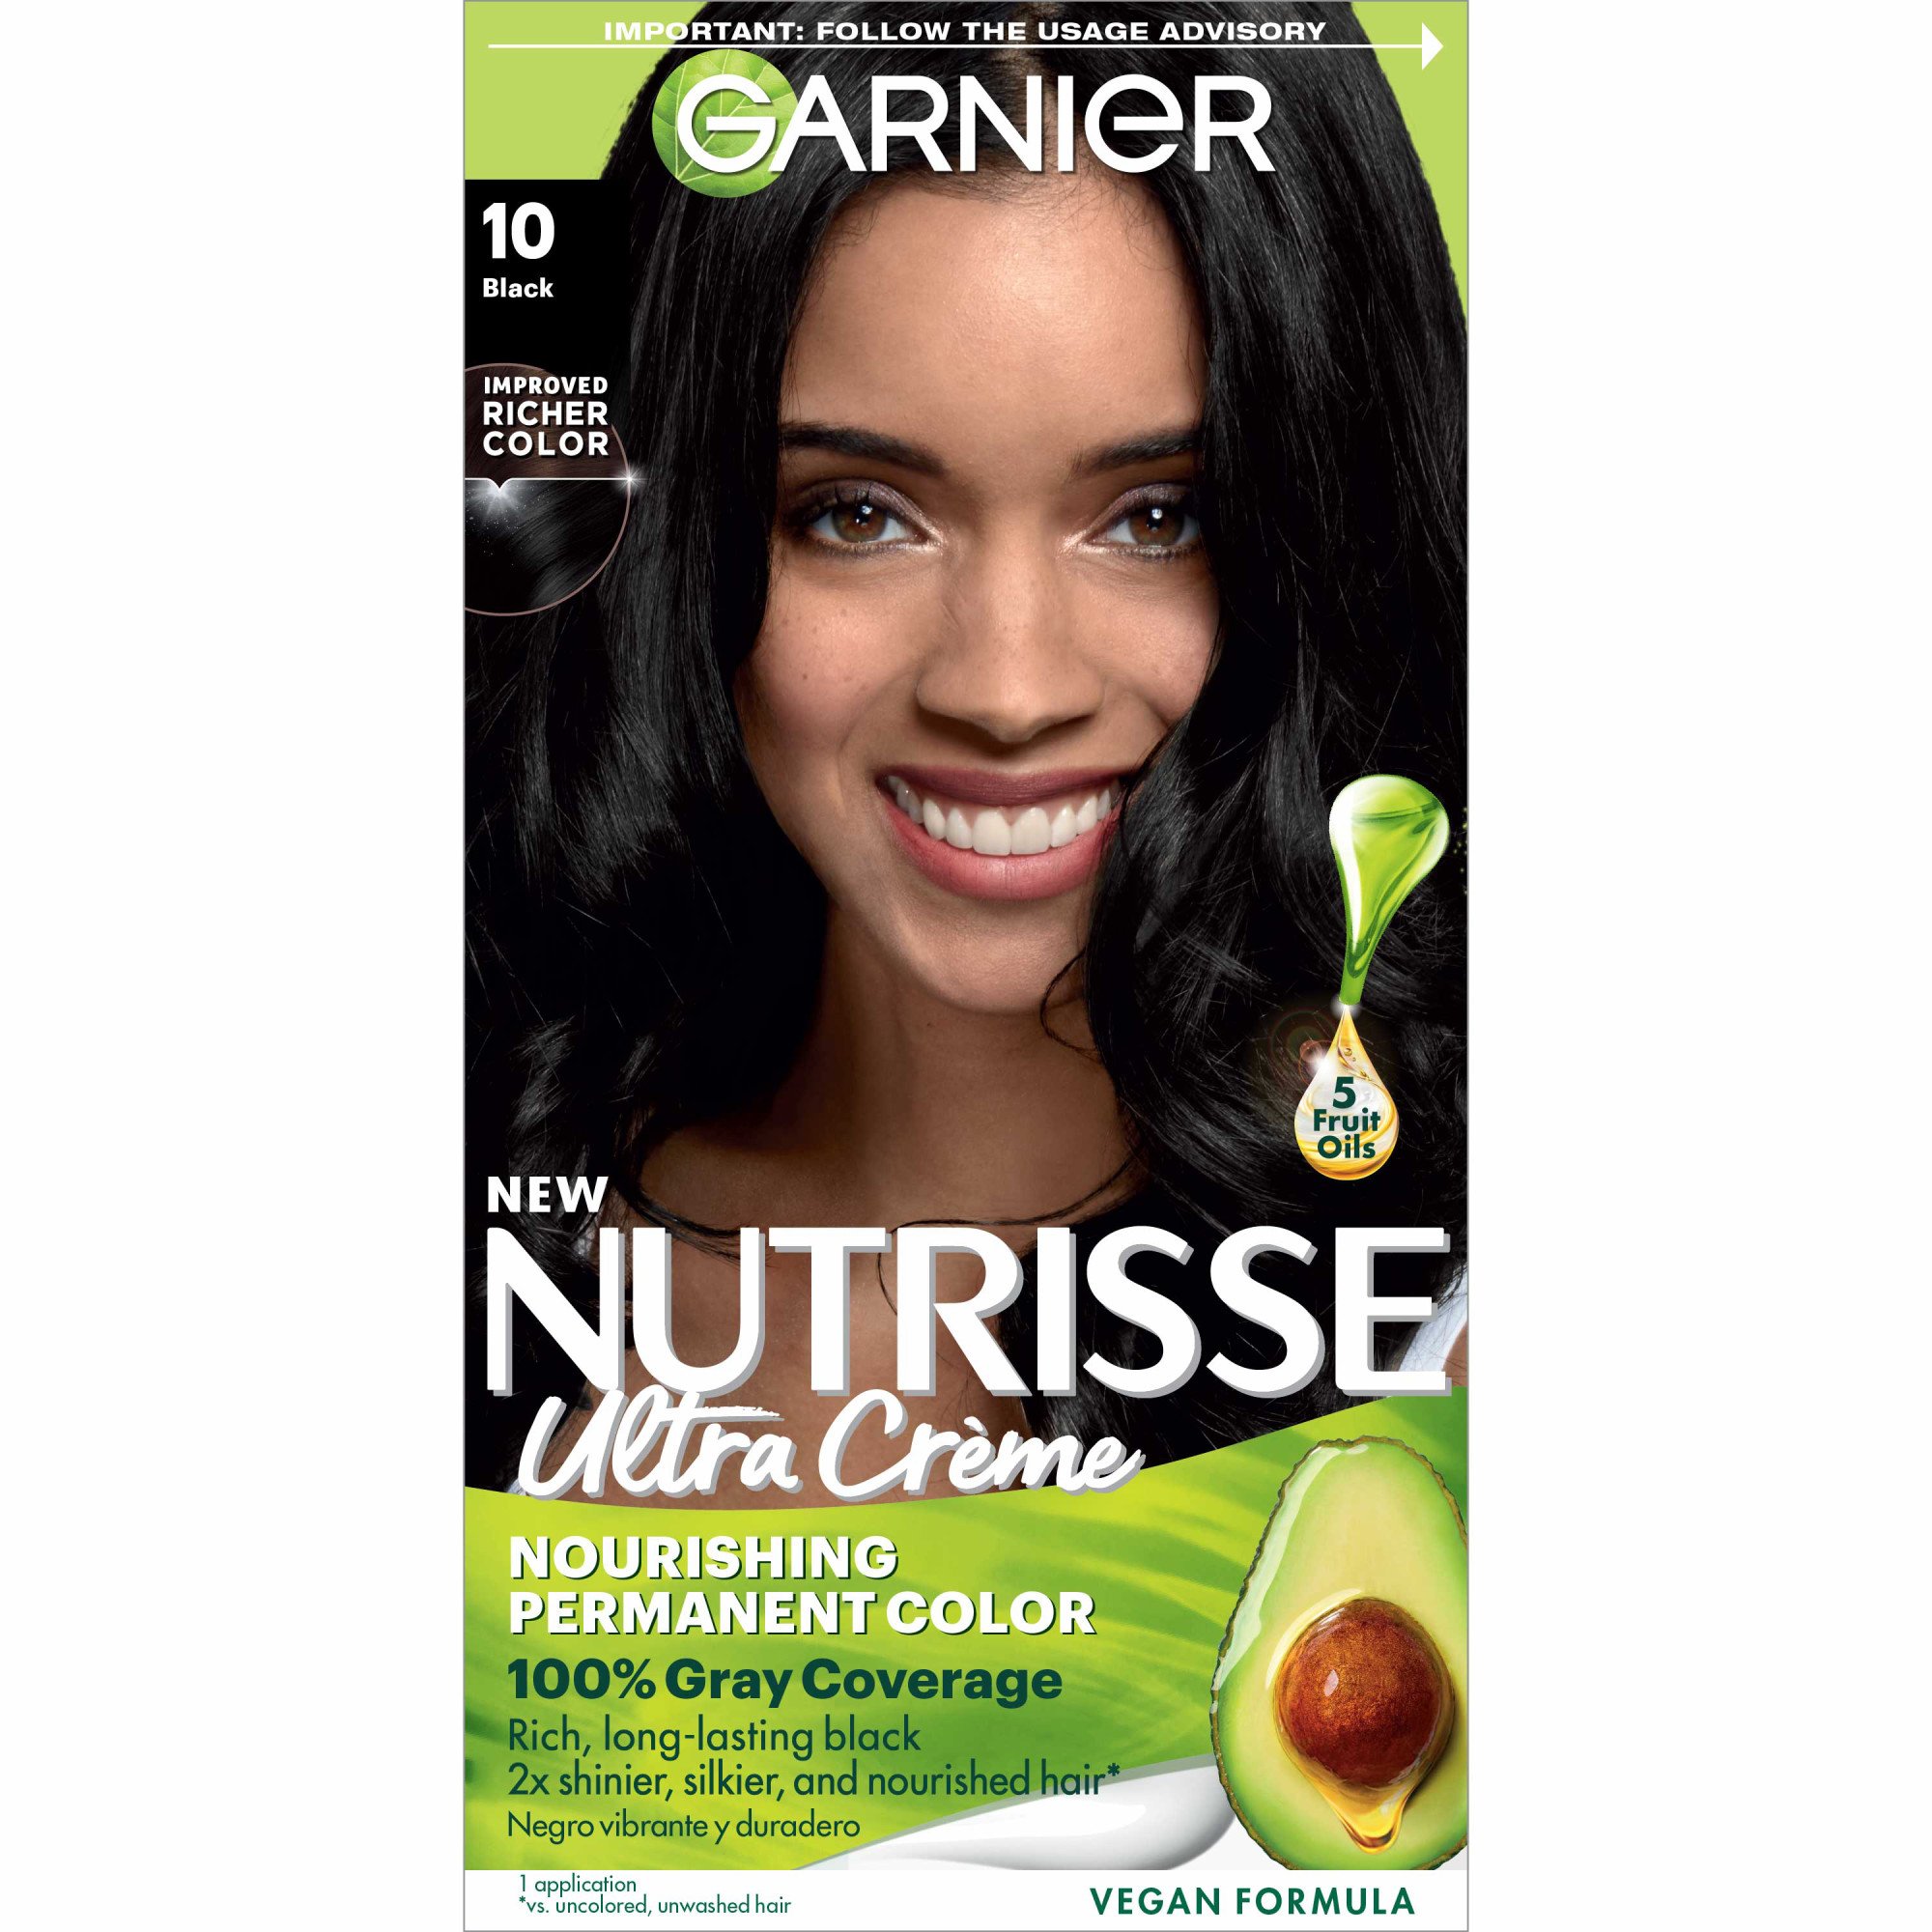 at Shop Nutrisse 10 Five Creme - H-E-B Oils Color Hair Hair (Licorice) Color - Black Nourishing with Garnier